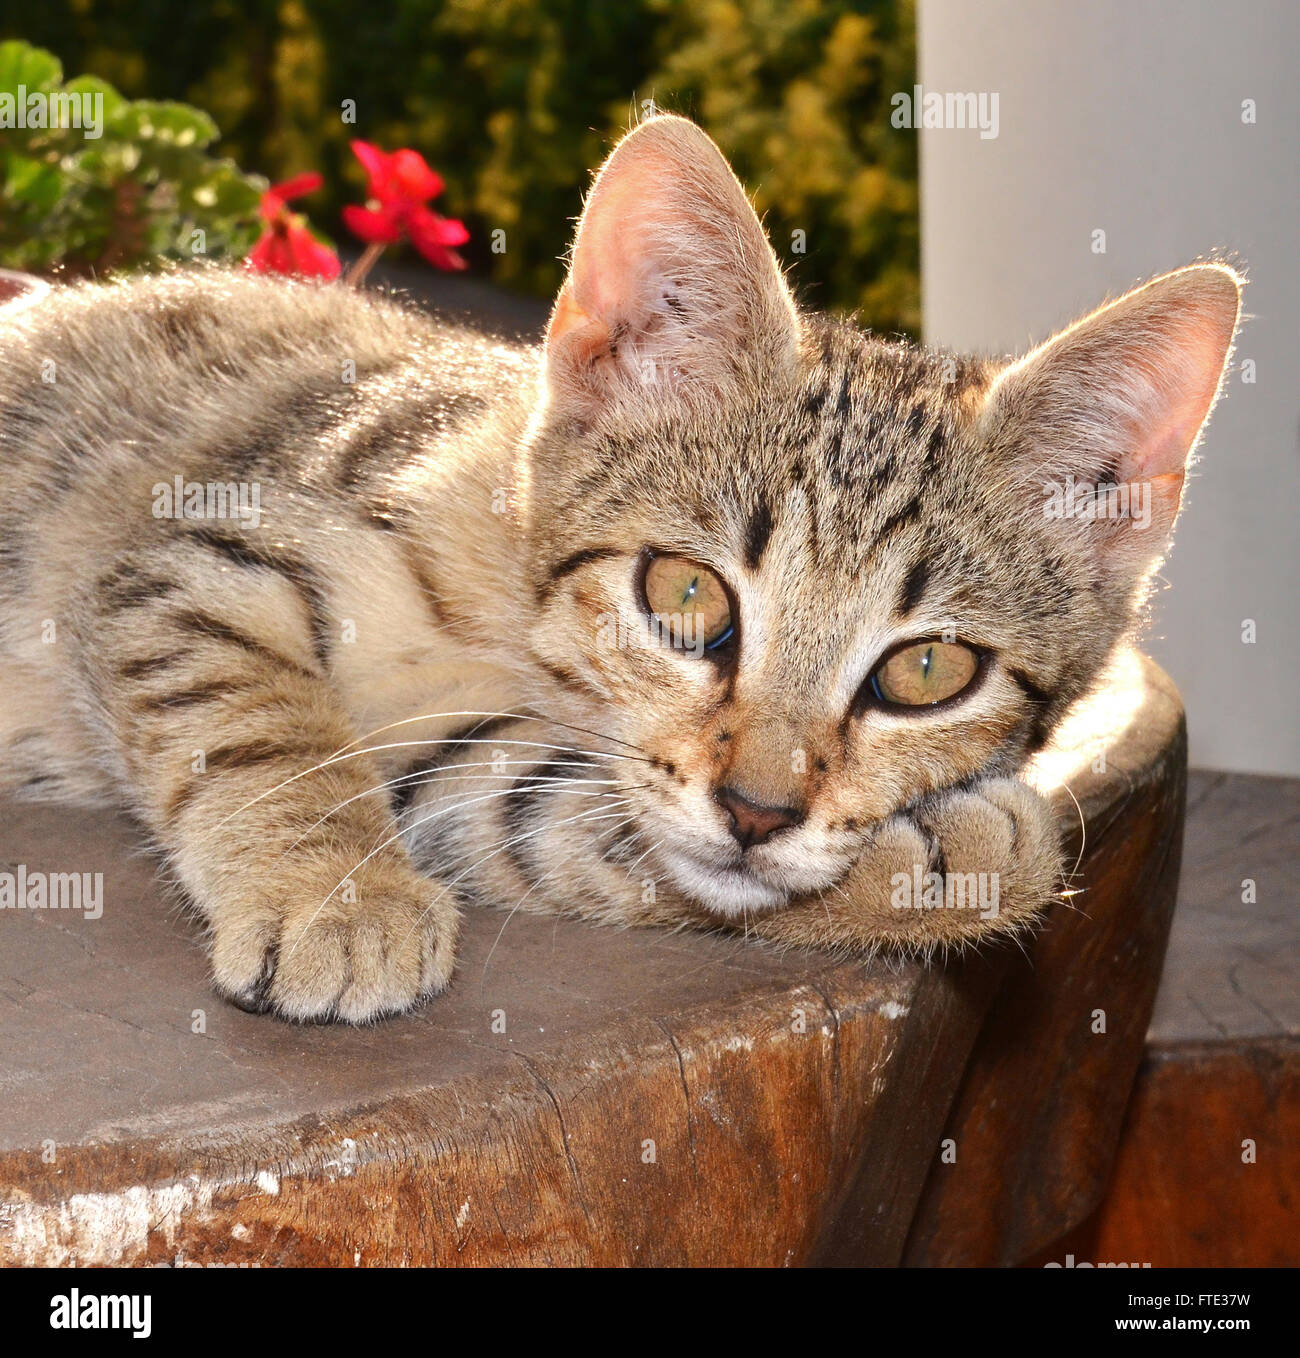 cat portrait Stock Photo